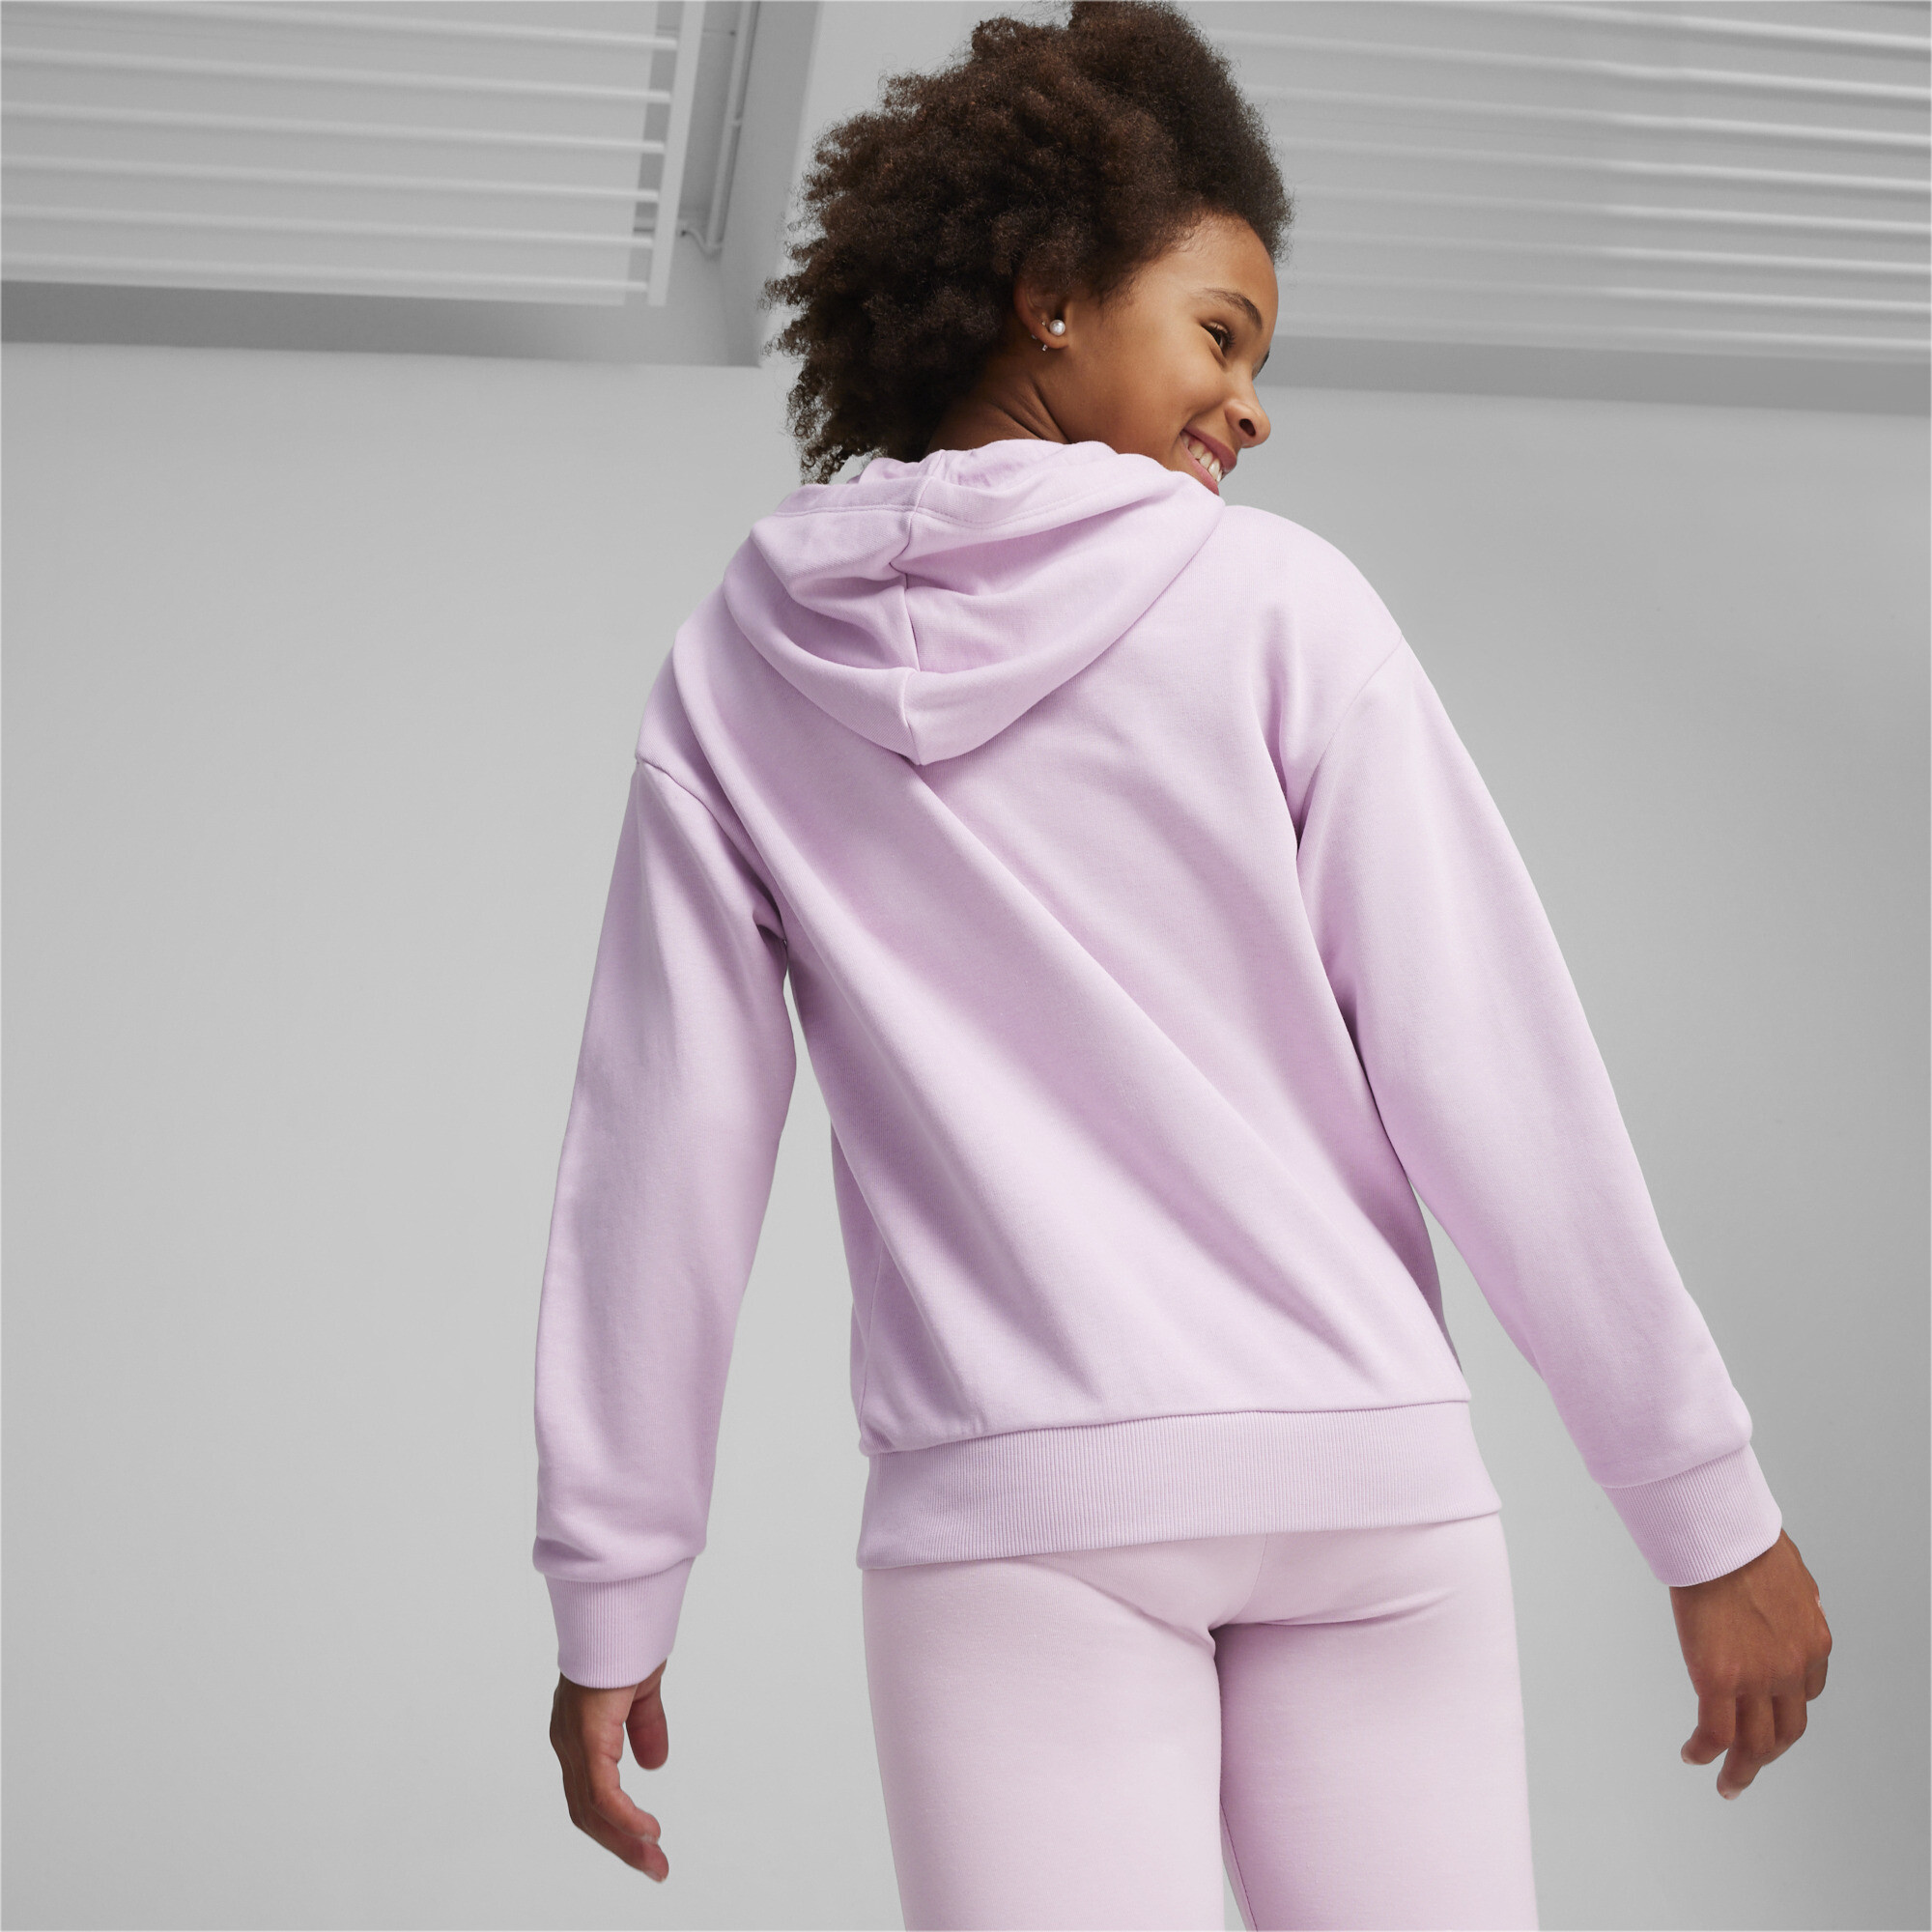 PUMA POWER Colourblock Hoodie In Purple, Size 15-16 Youth